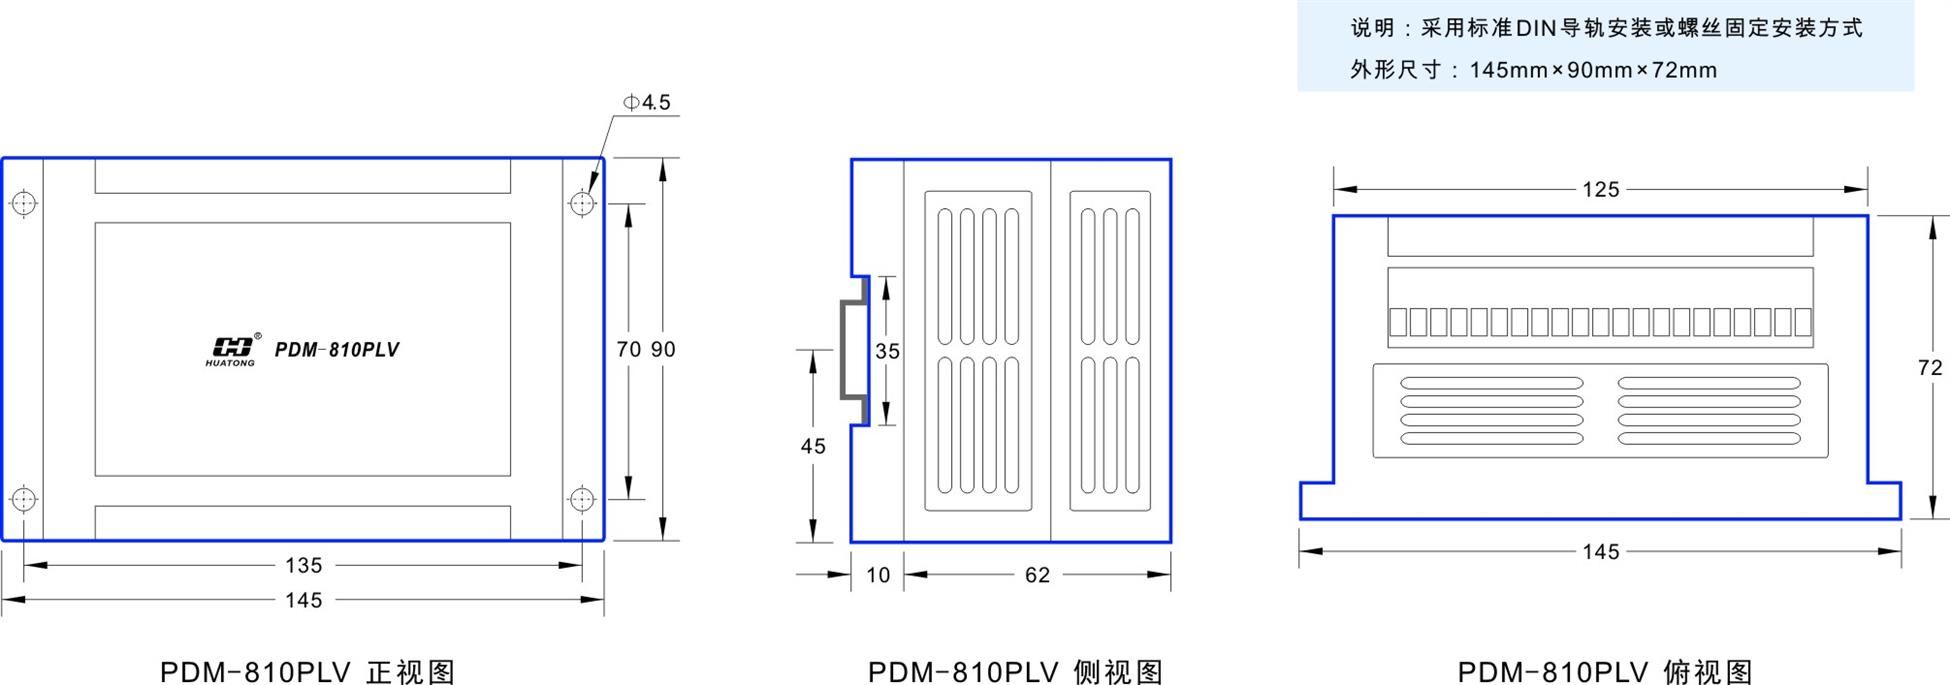 2-PDM-810PLV尺寸图.jpg